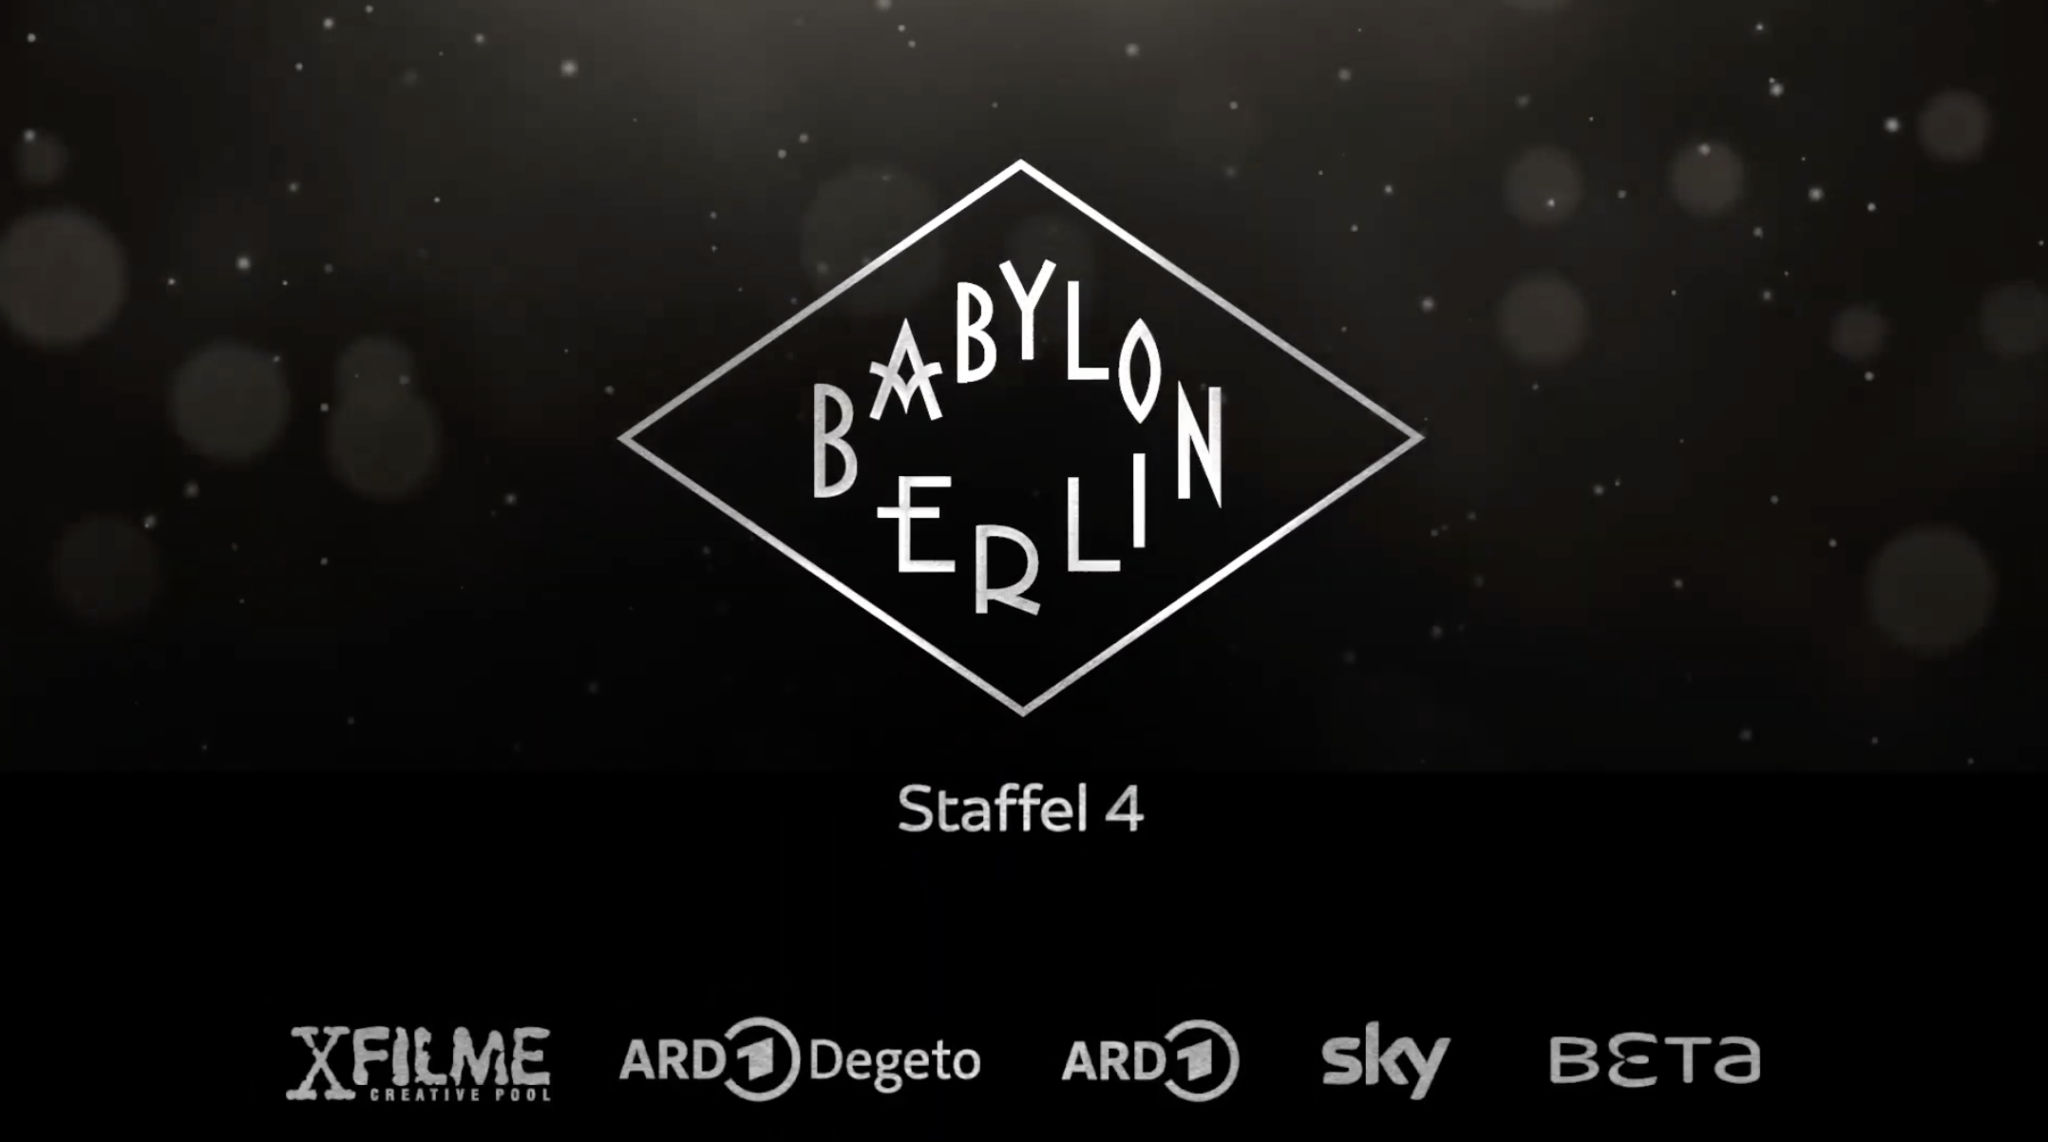 Babylon Berlin Trailer Molecular Sound